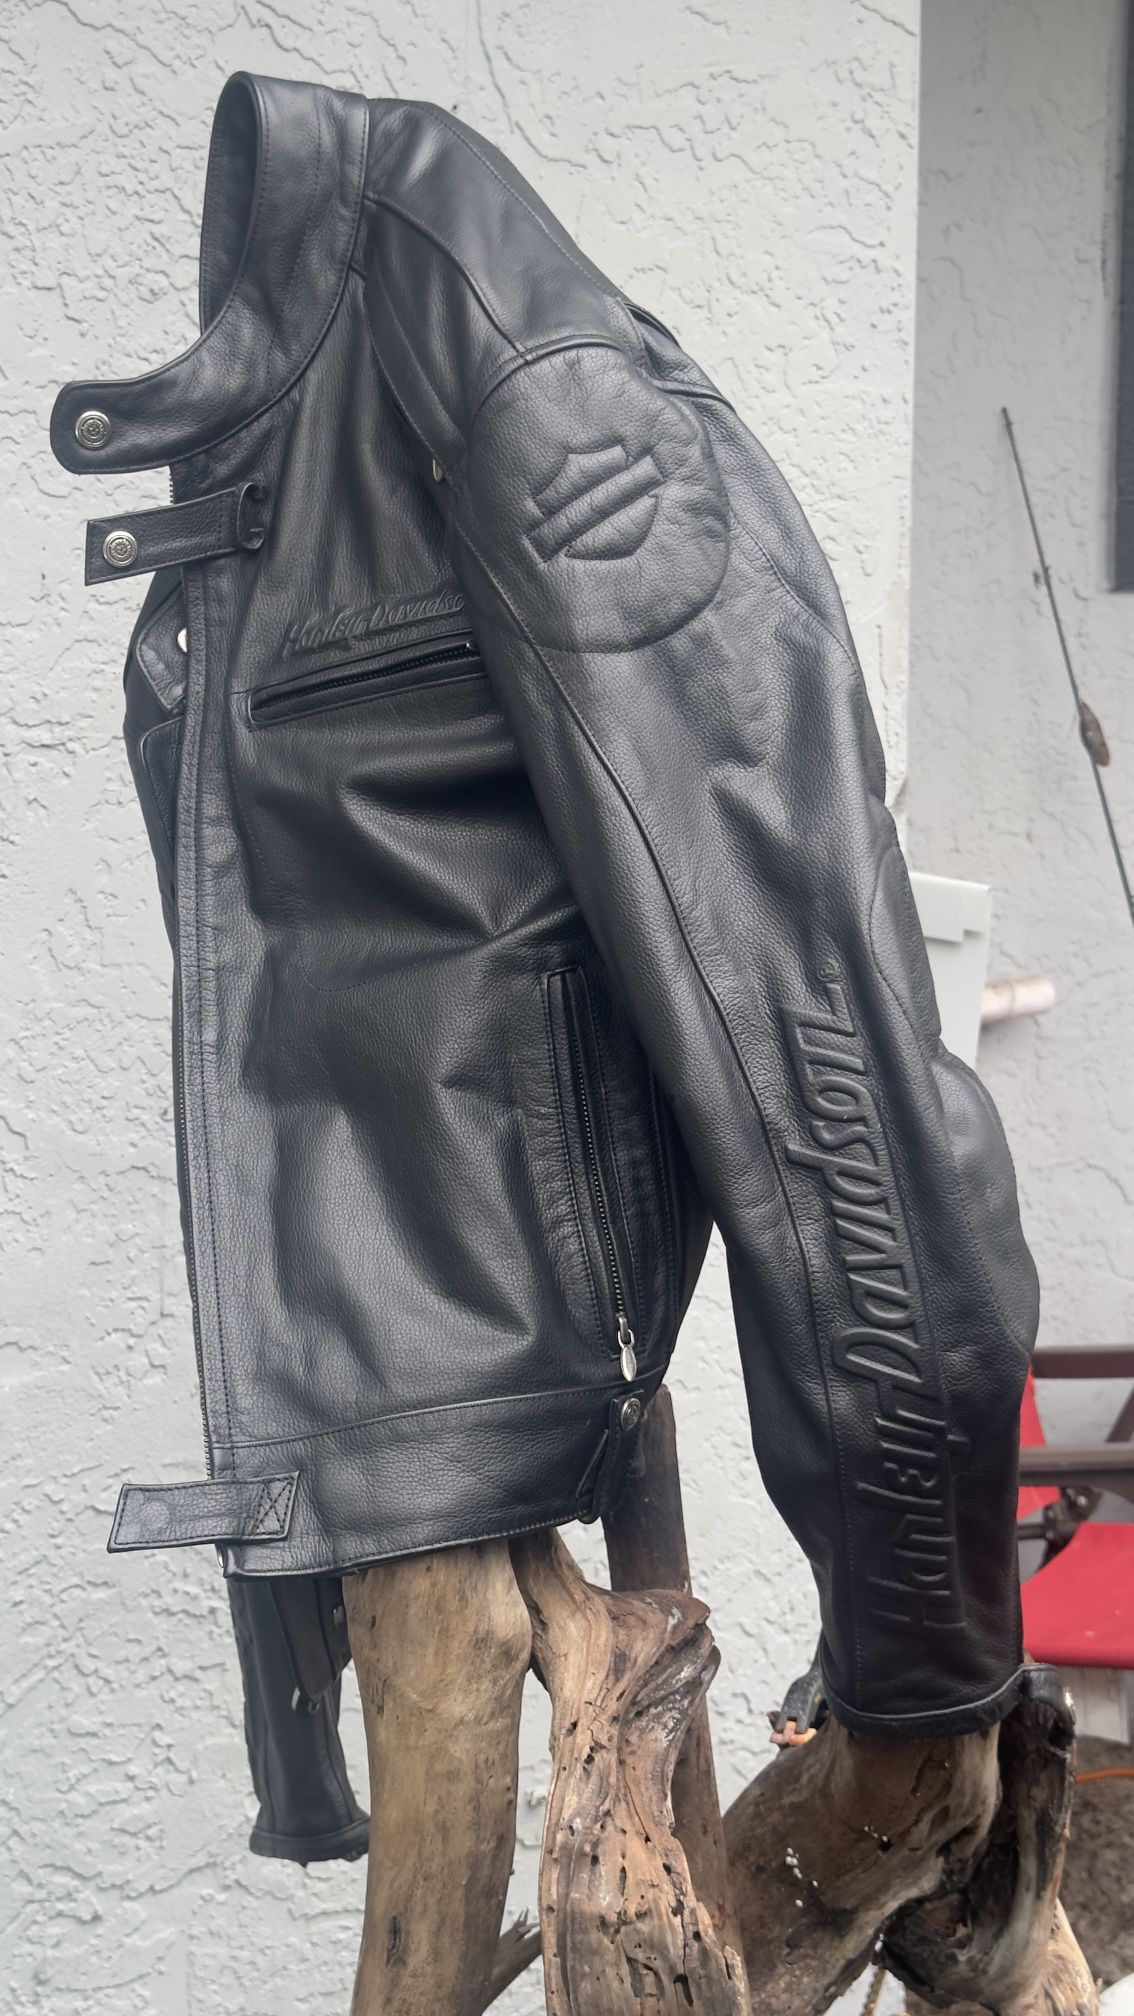 Harley Davidson Men’s Leather Jacket size XL